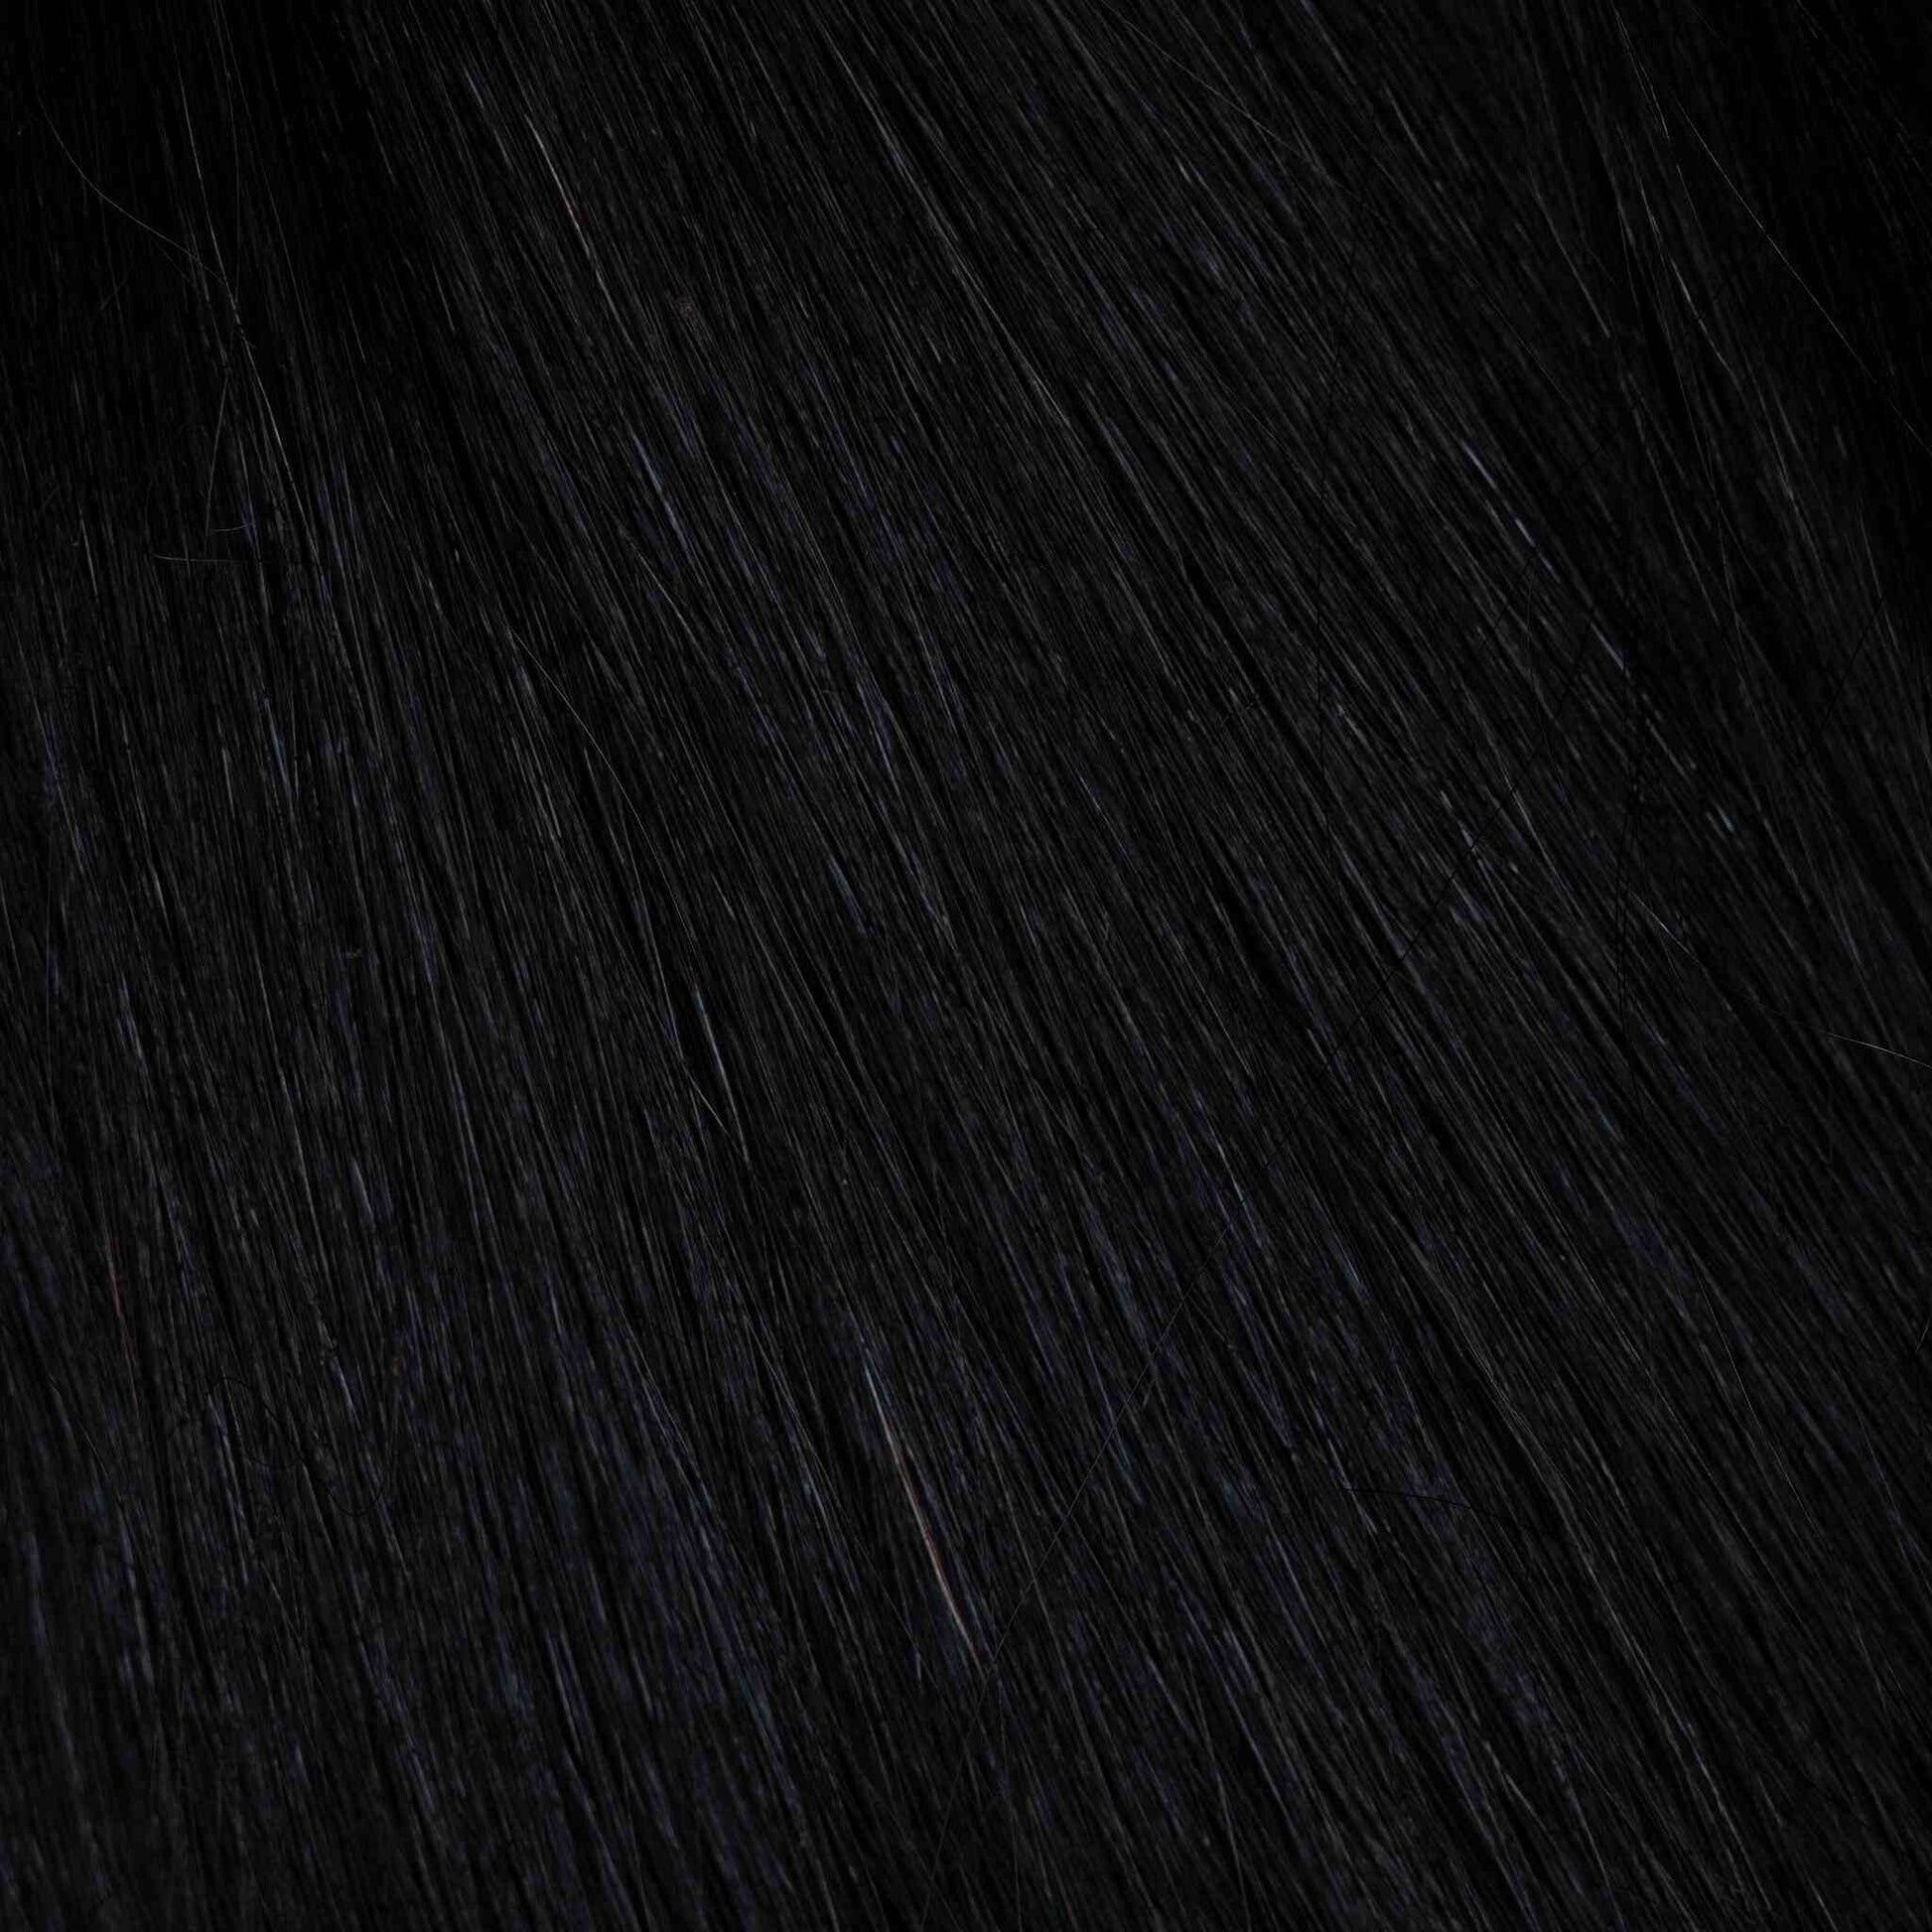 K-Tip 20" 25g Professional Hair Extensions - Jet Black #1